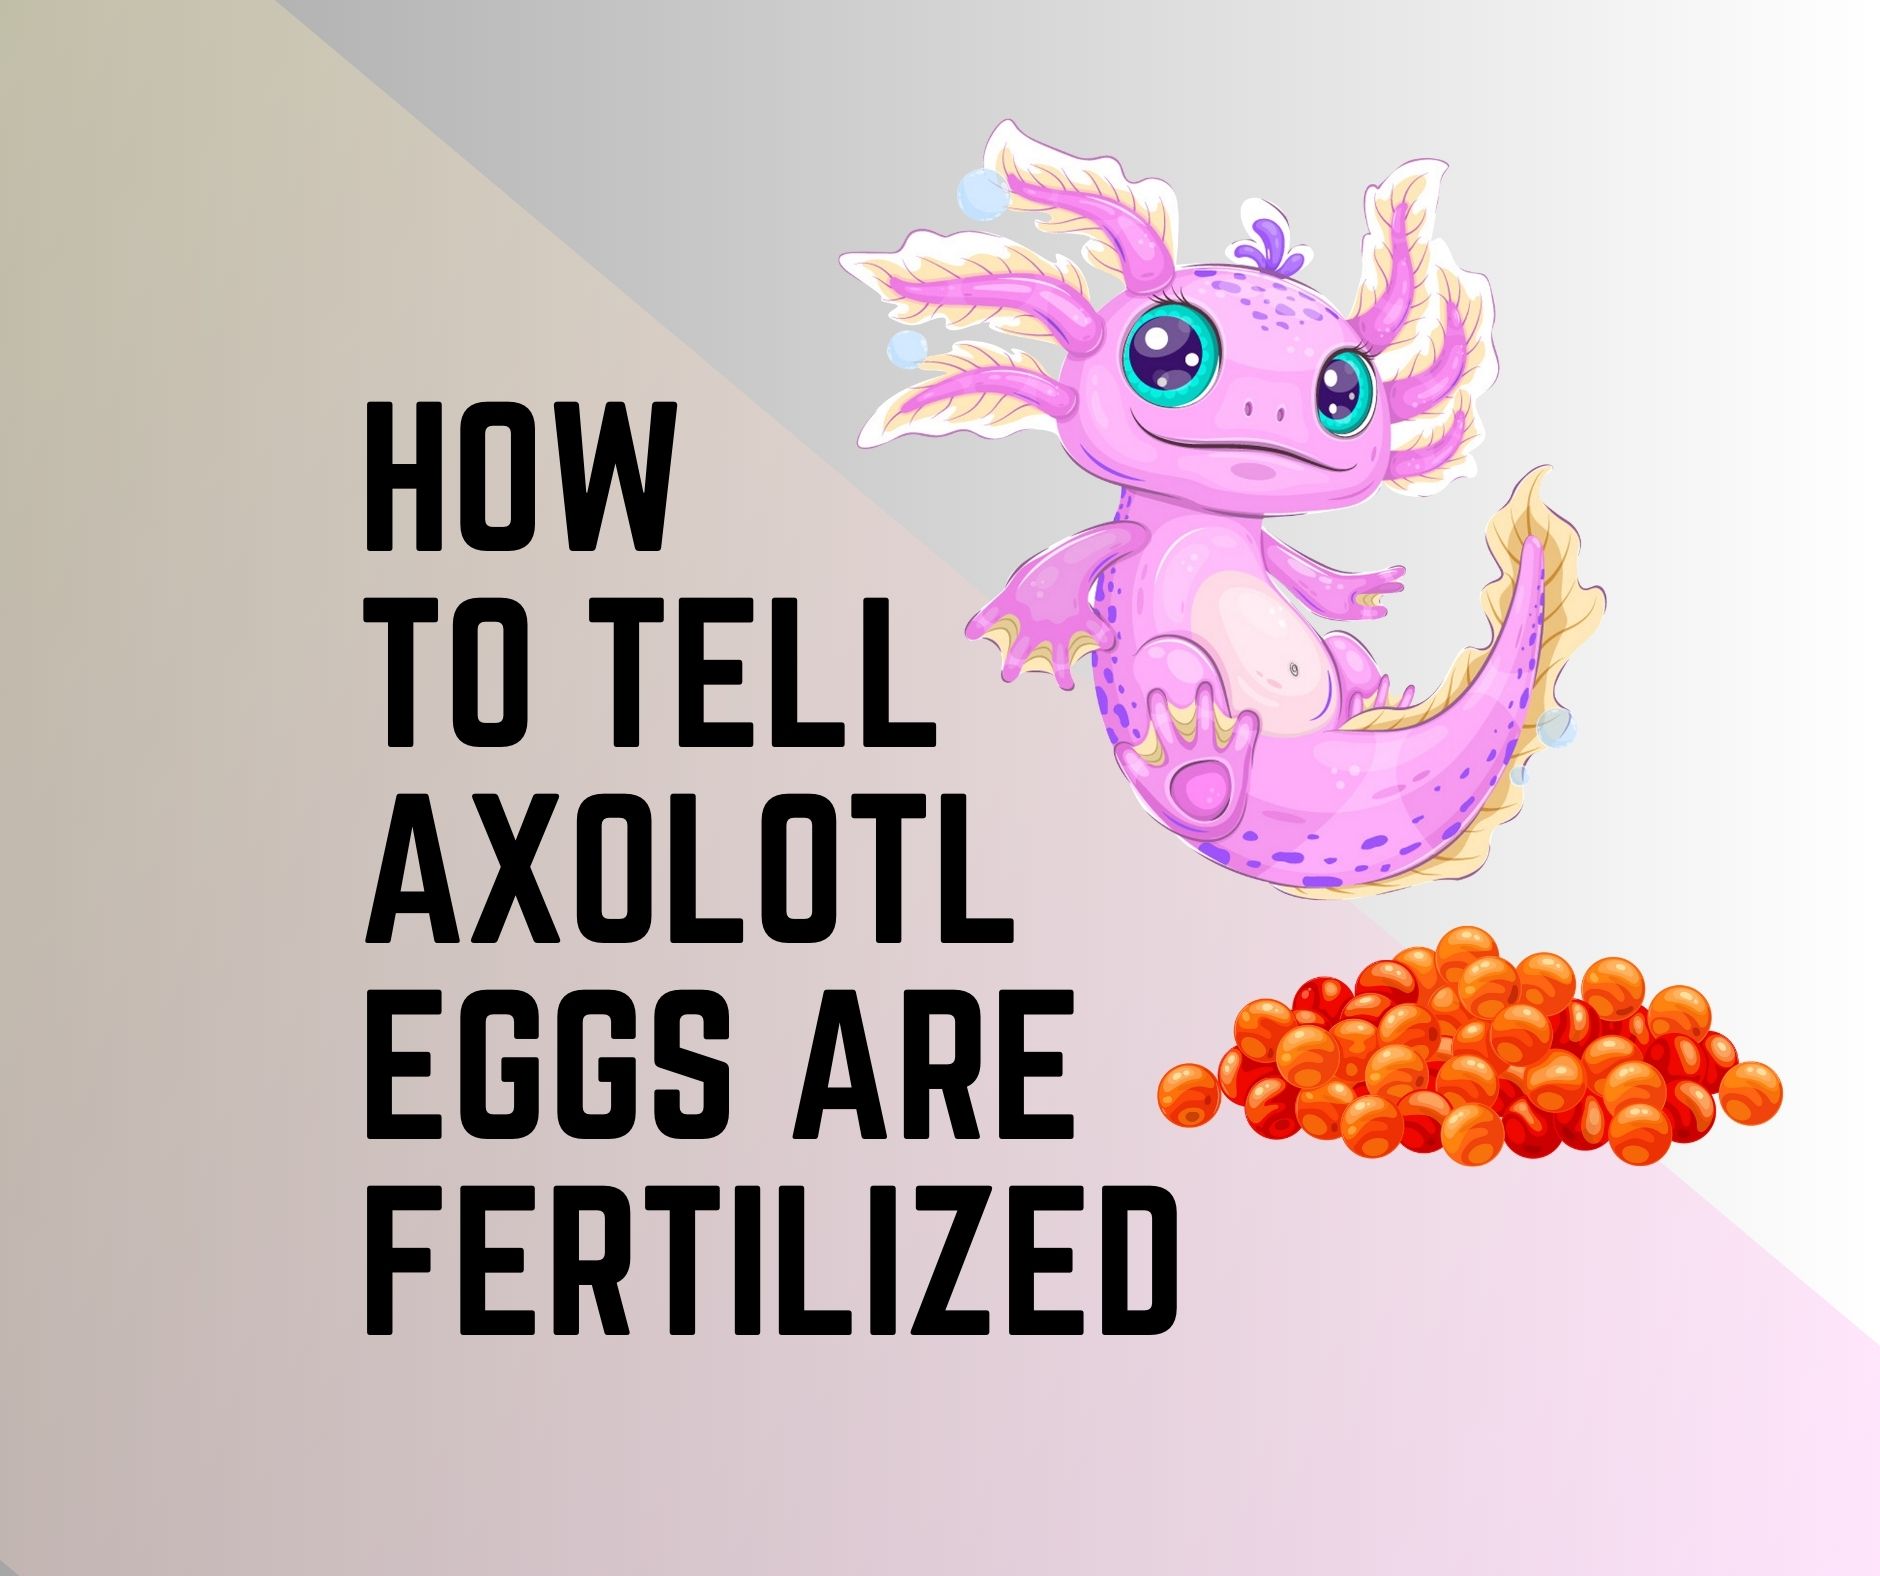 Axolotl Eggs Are Fertilized